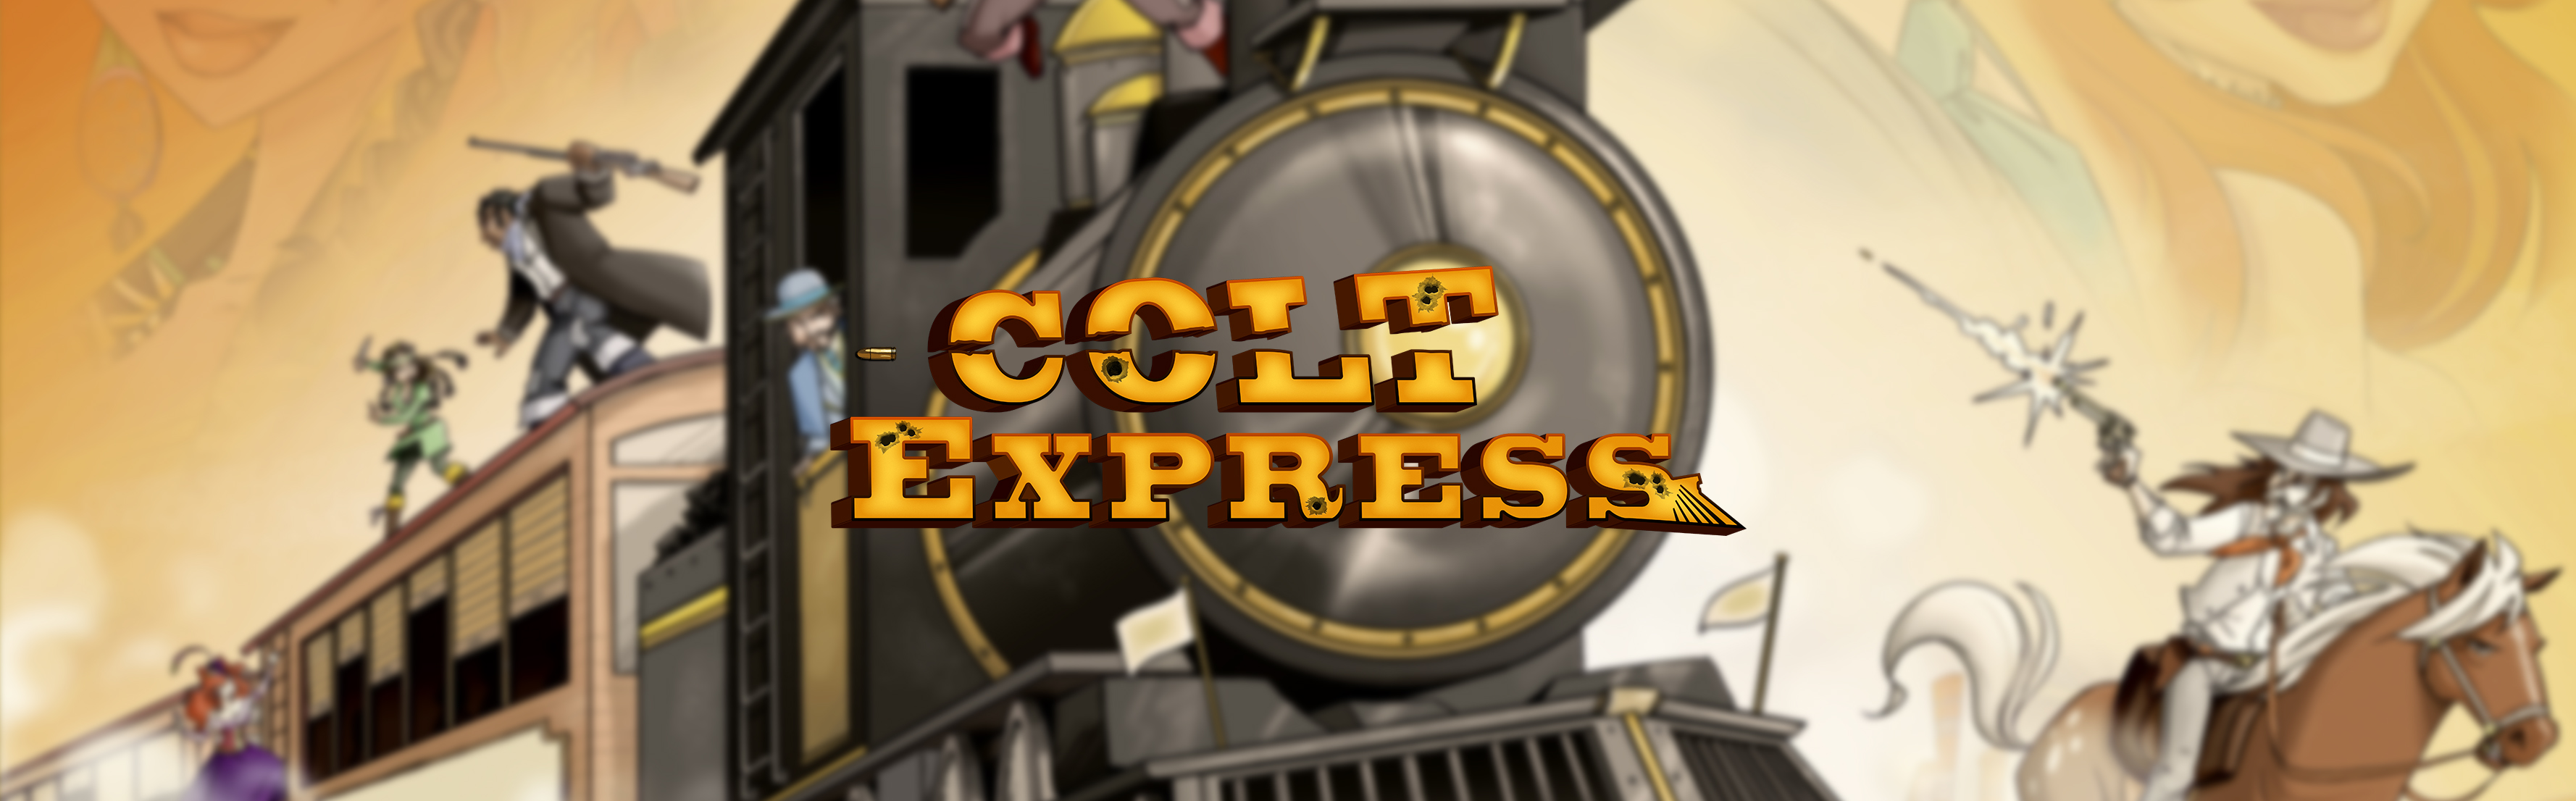 Colt Express – Ludonaute